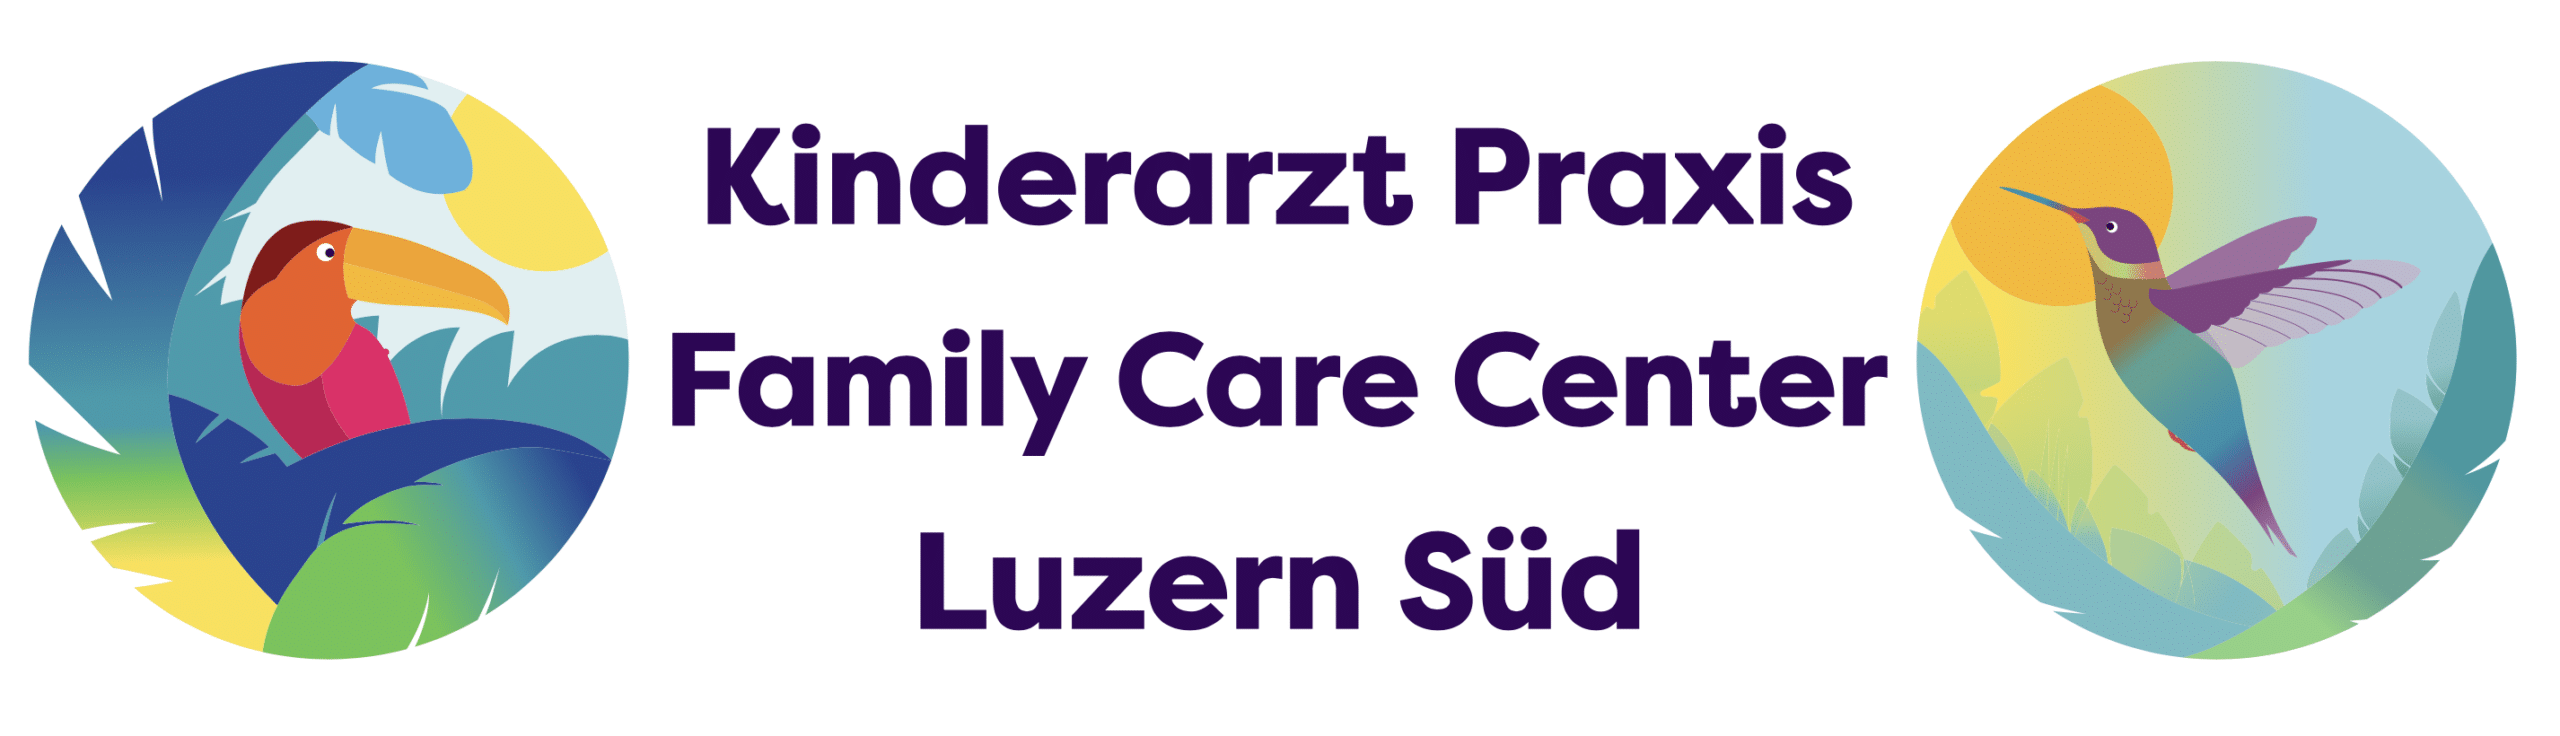 Kinderarztpraxis-Luzern Sued